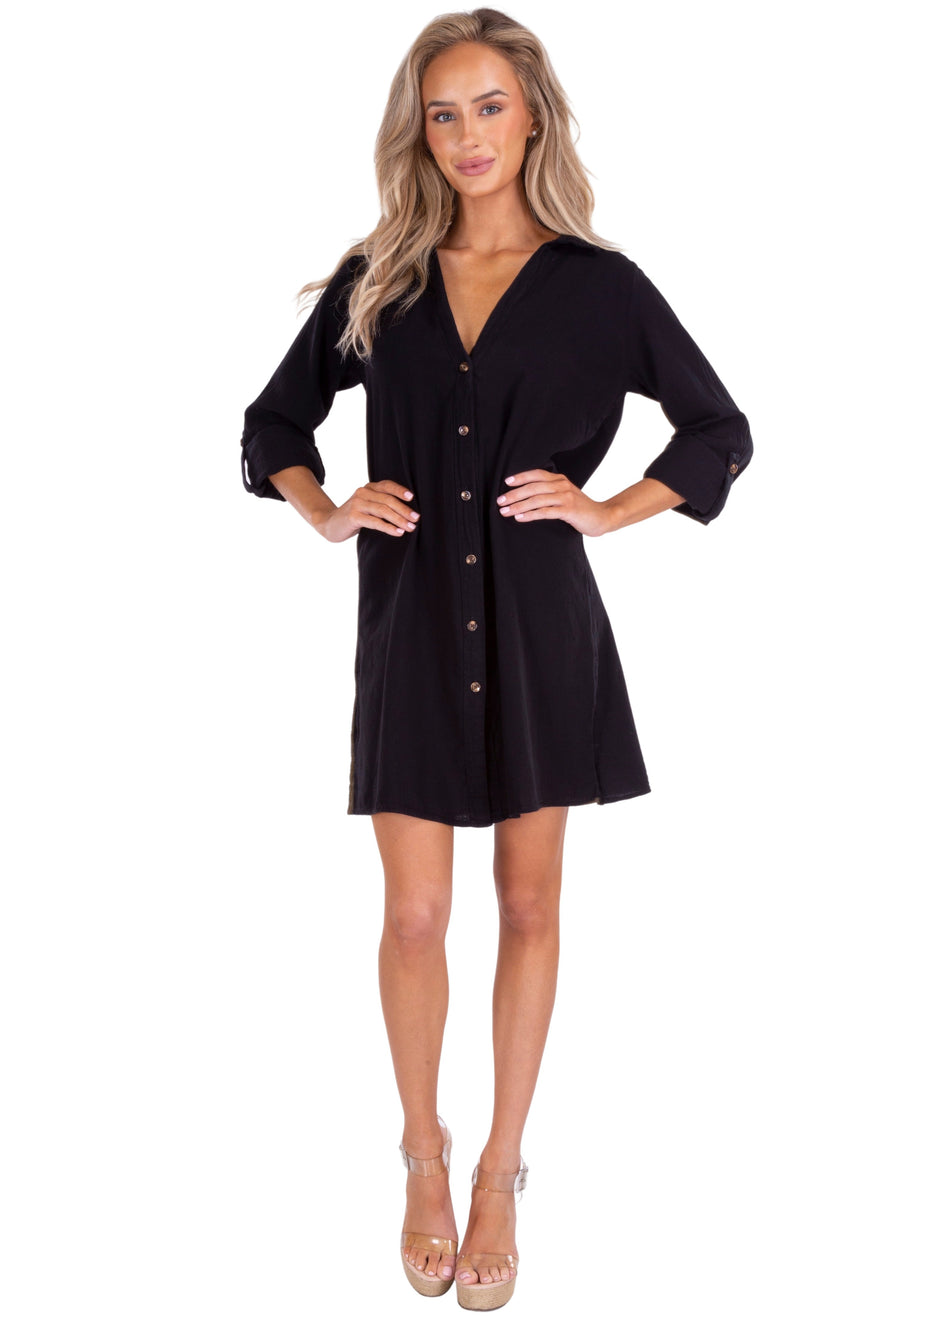 NW1408 - Black Cotton Tunic Dress